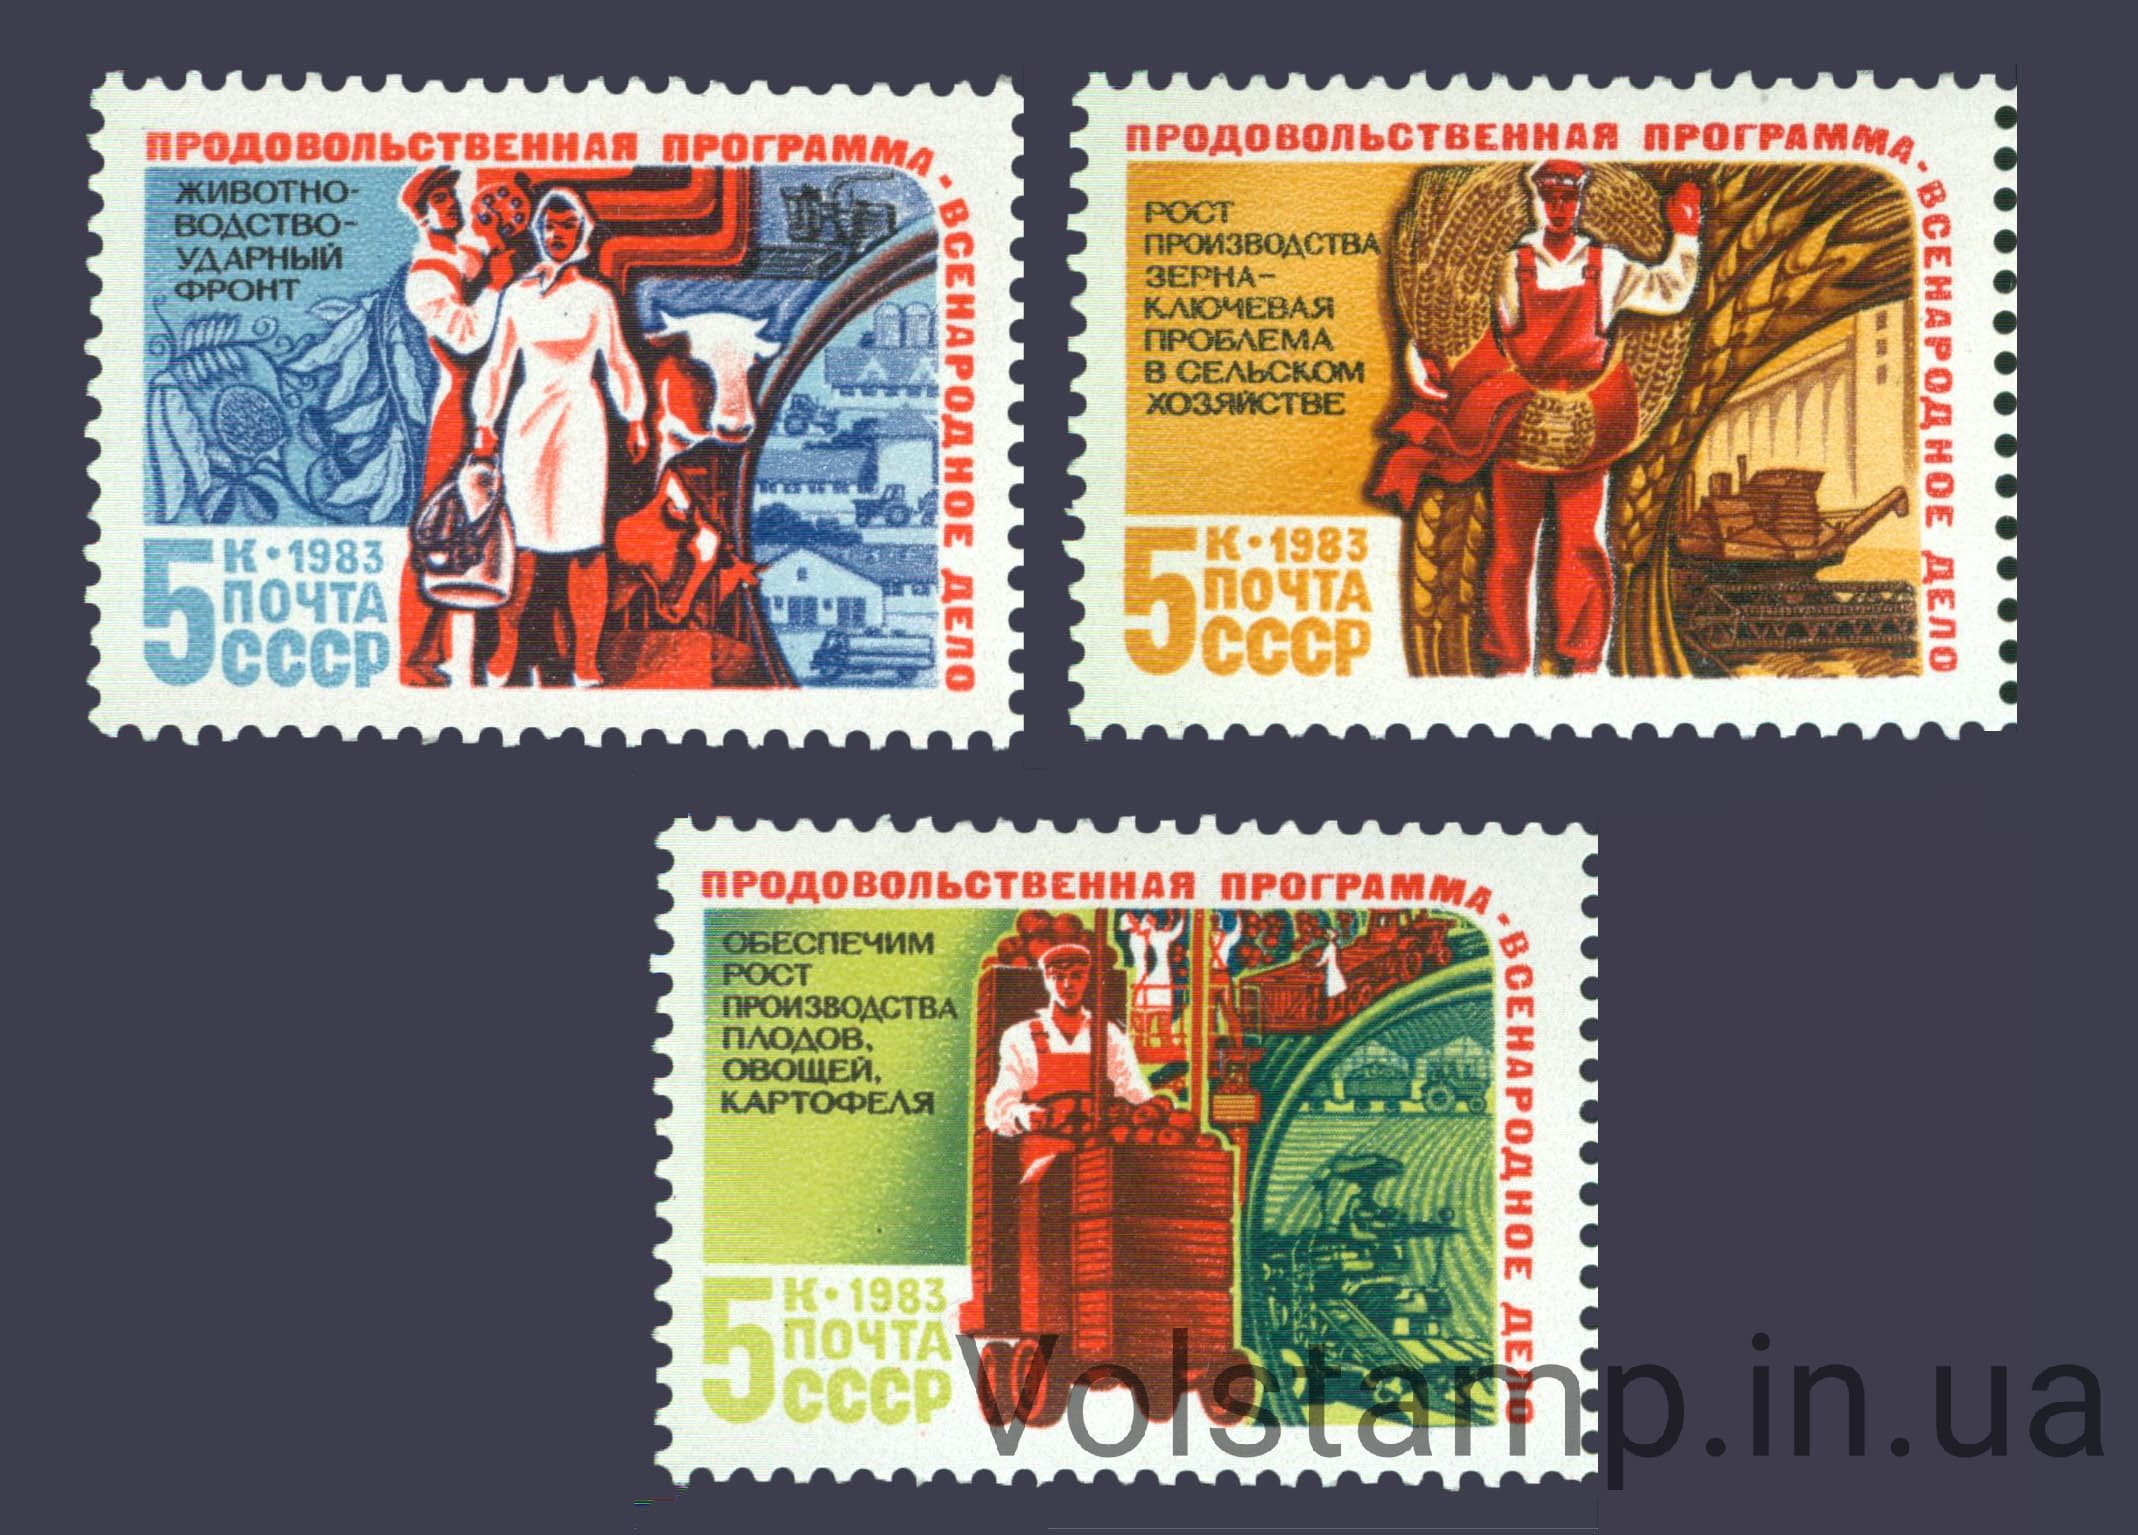 1983 series of stamps Food Program USSR №5372-5374